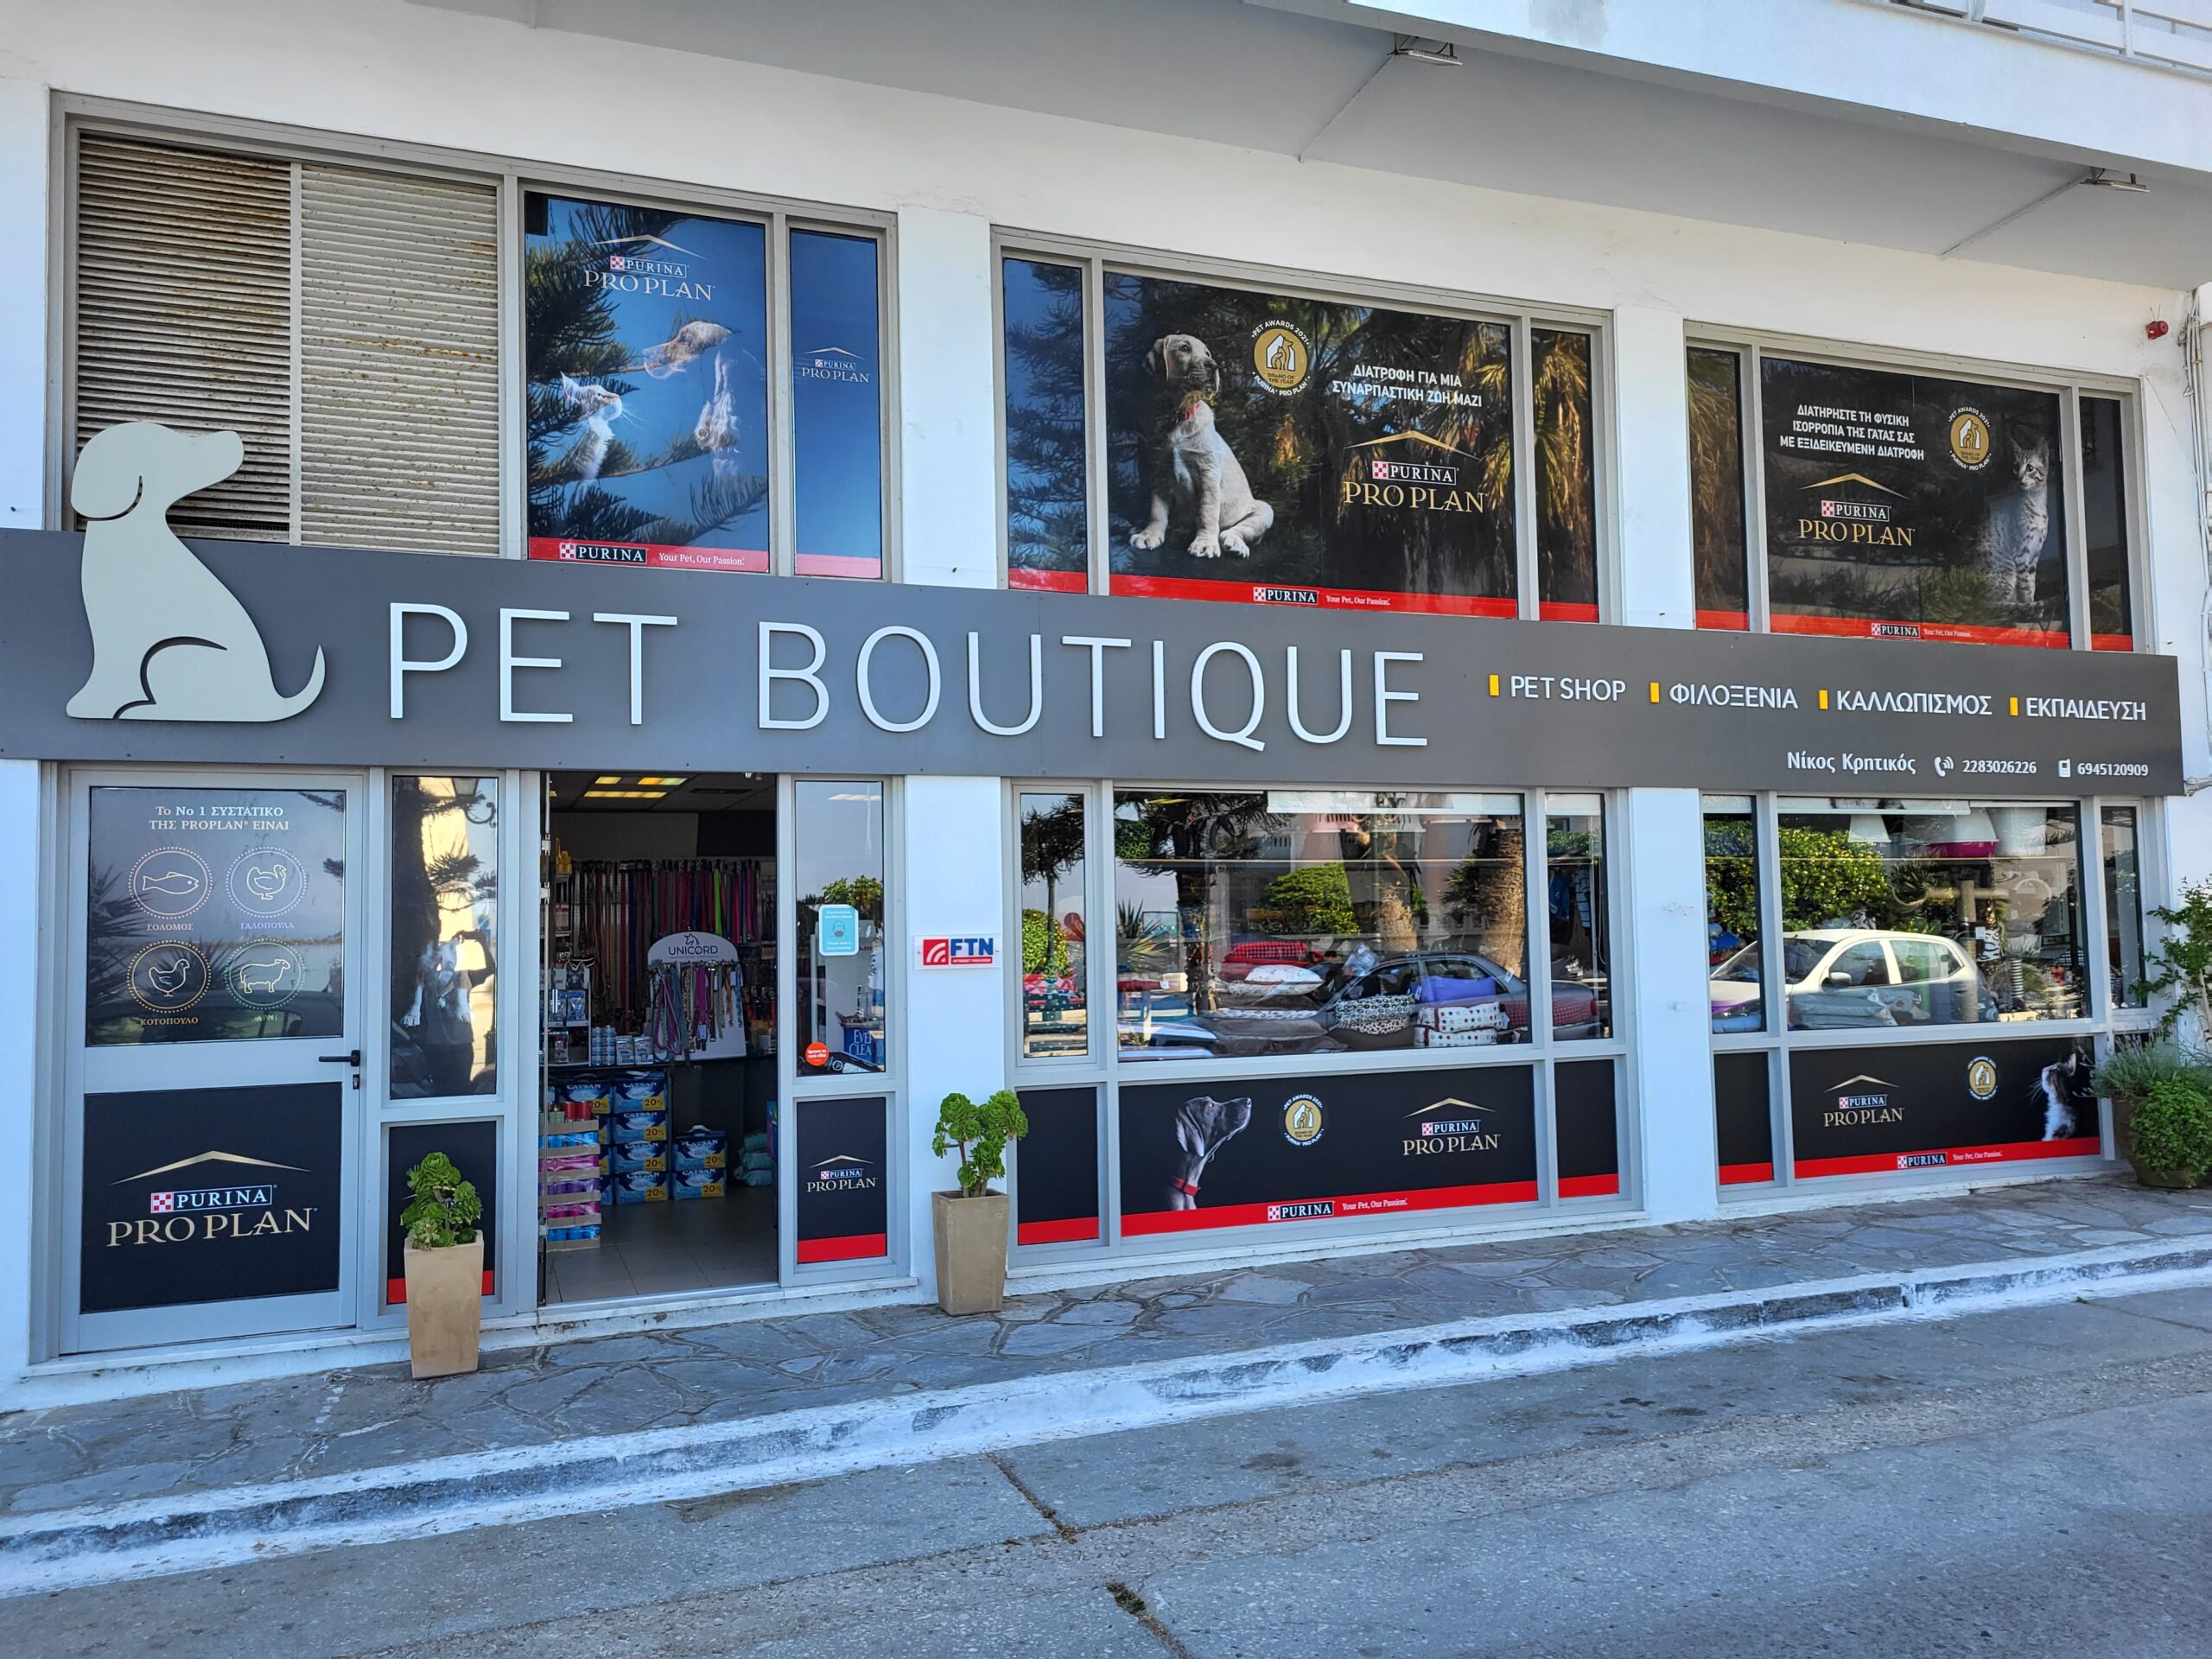 Pet shop perto de mim - IPetshop